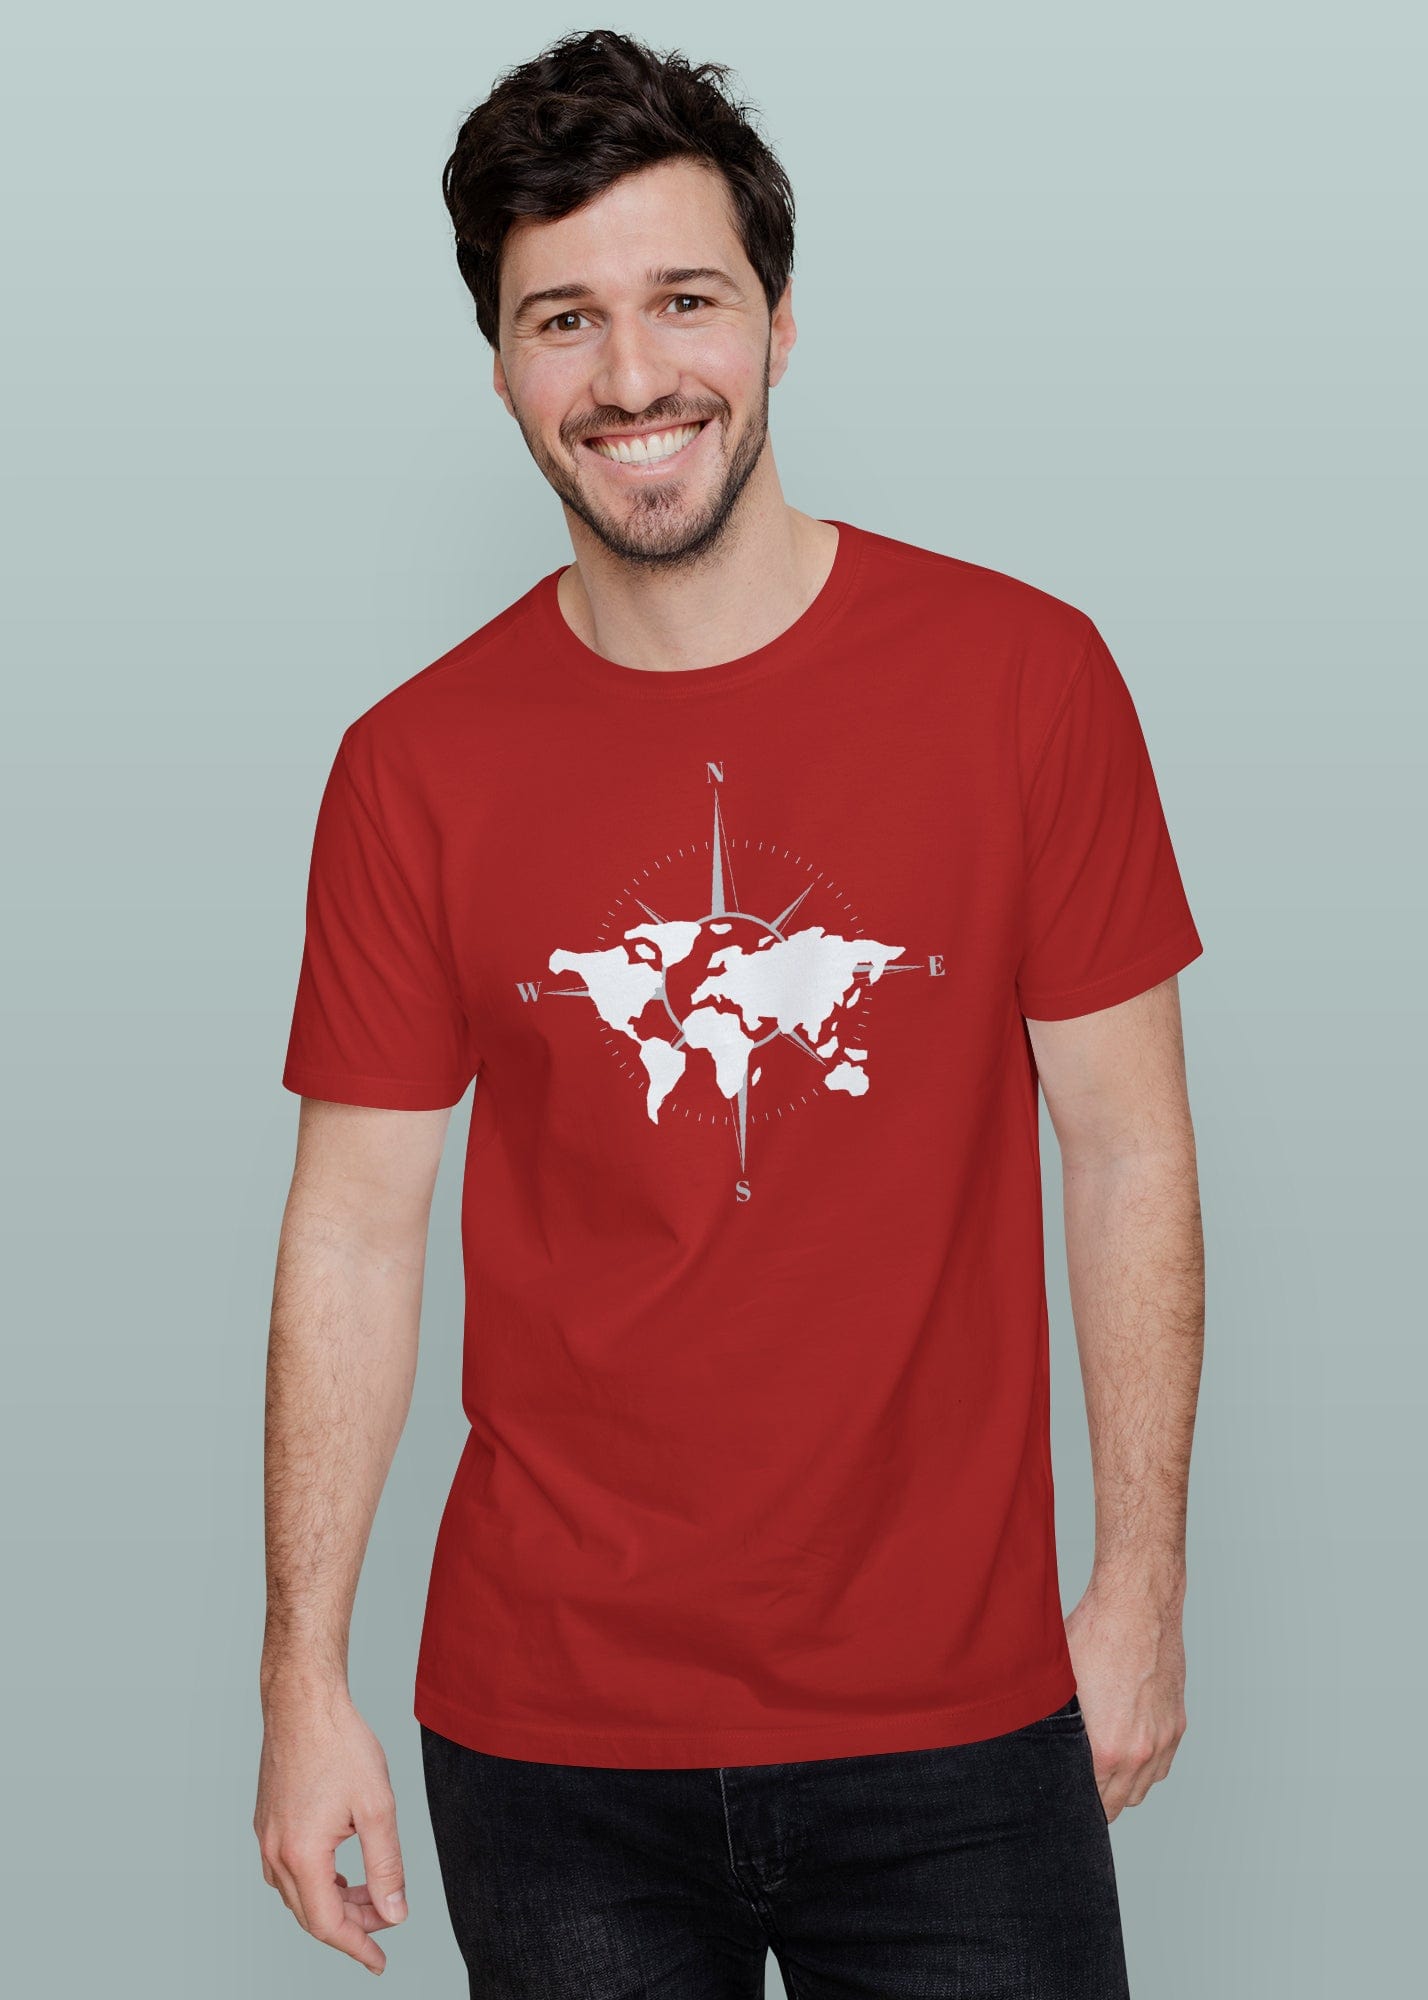 World Compass Printed Half Sleeve Premium Cotton T-shirt For Men